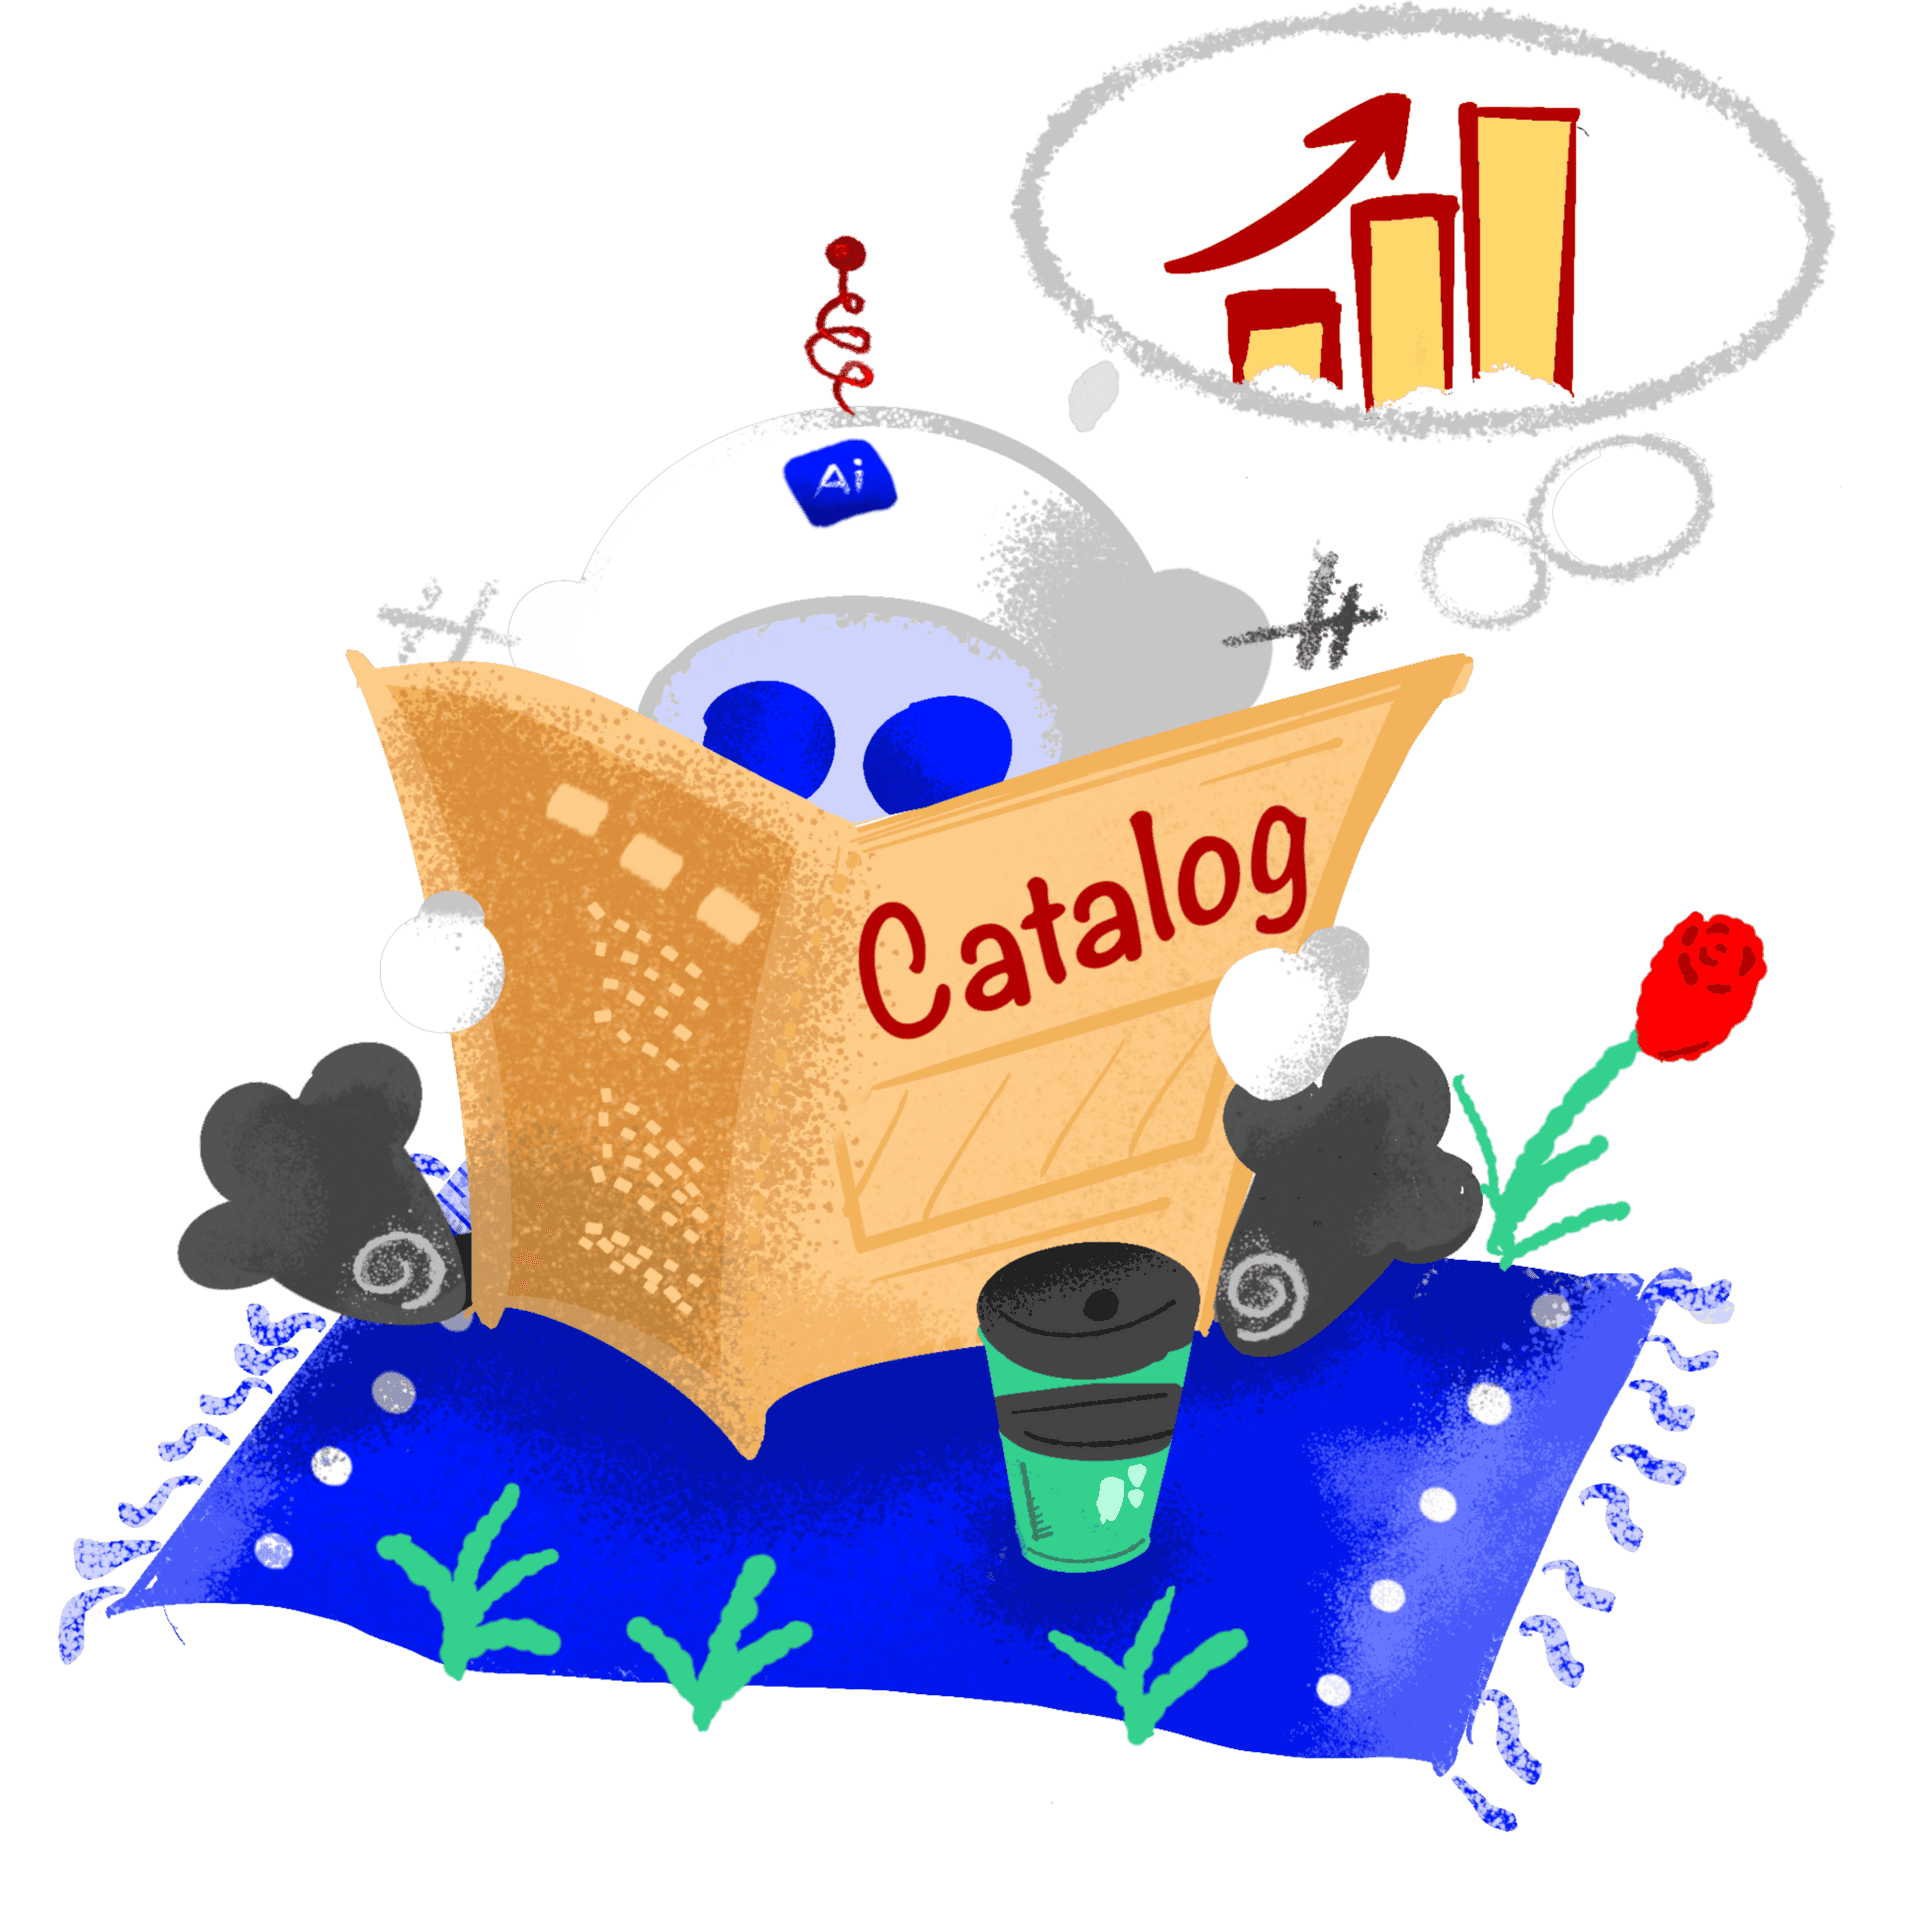 Provide an item catalog